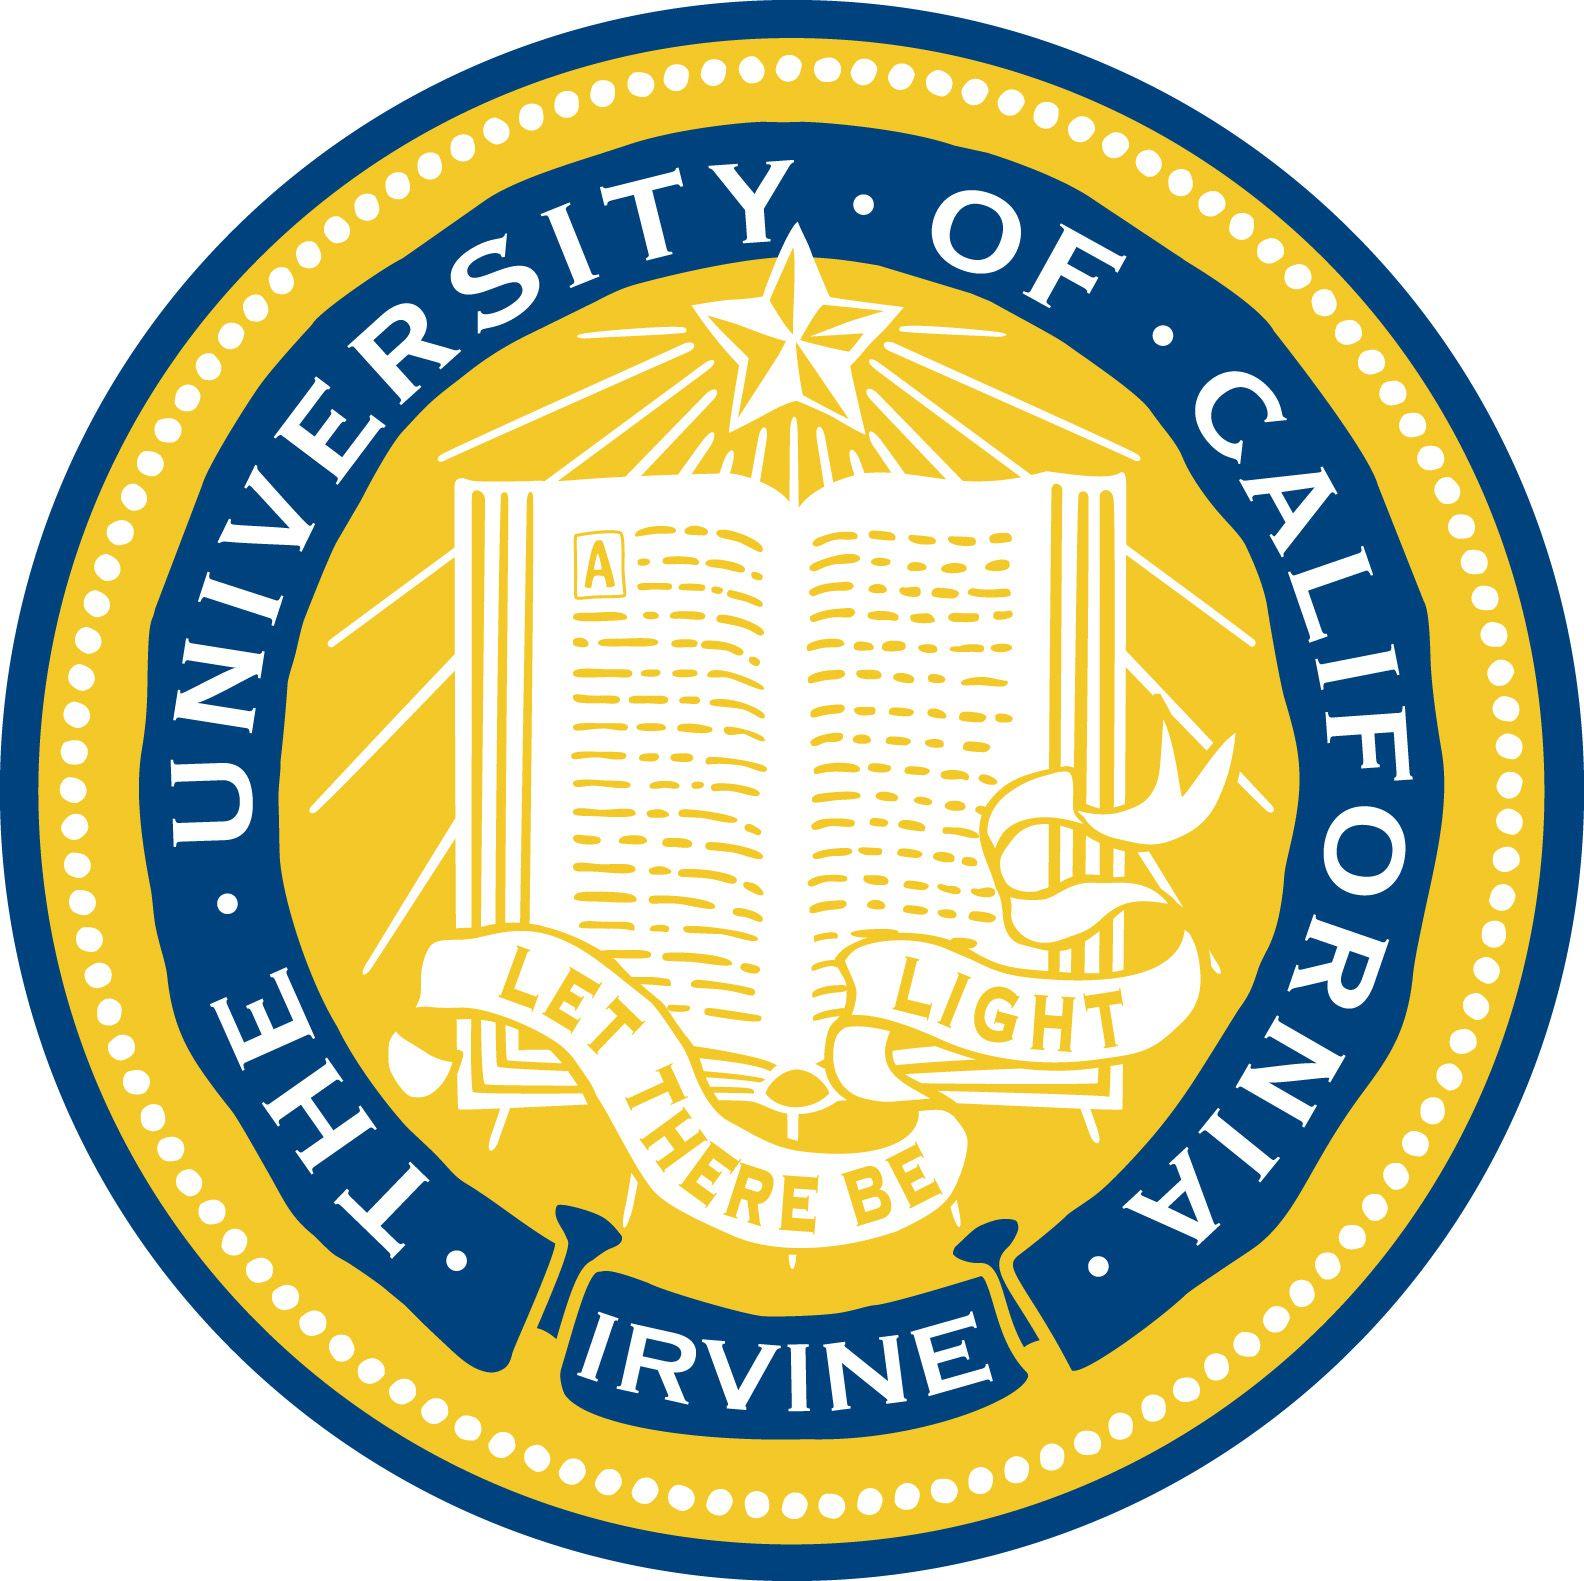 Irvine Logo - University of California (Irvine) Program